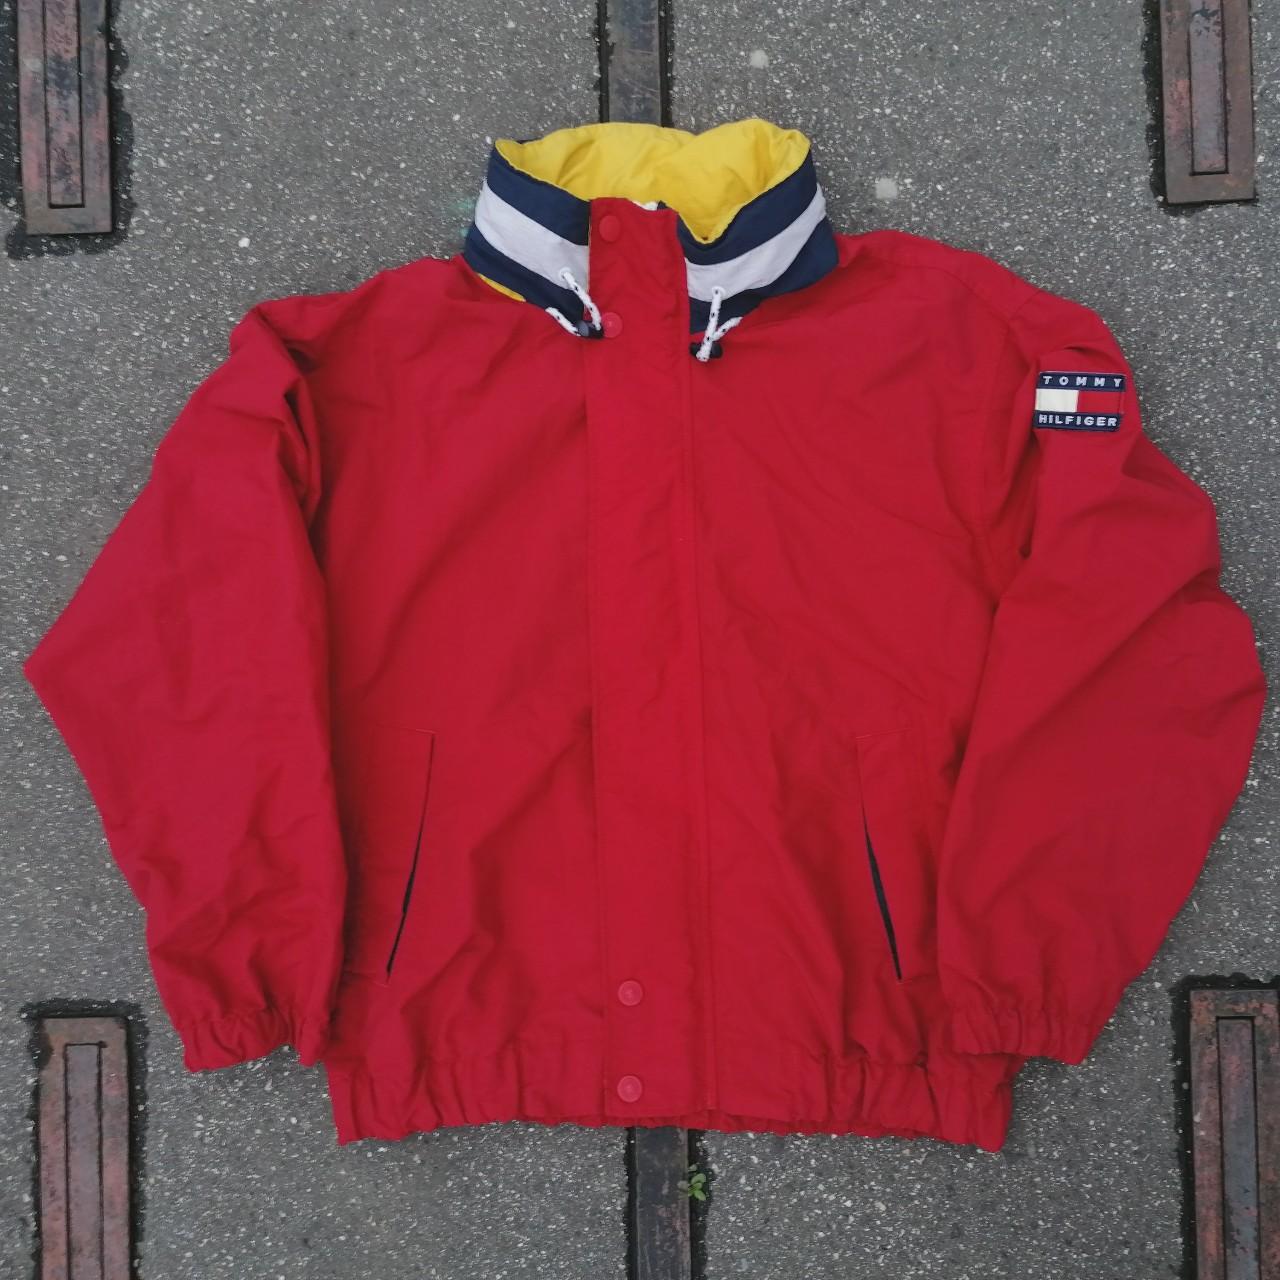 90s Tommy Hilfiger Jacket with Embroidered... - Depop